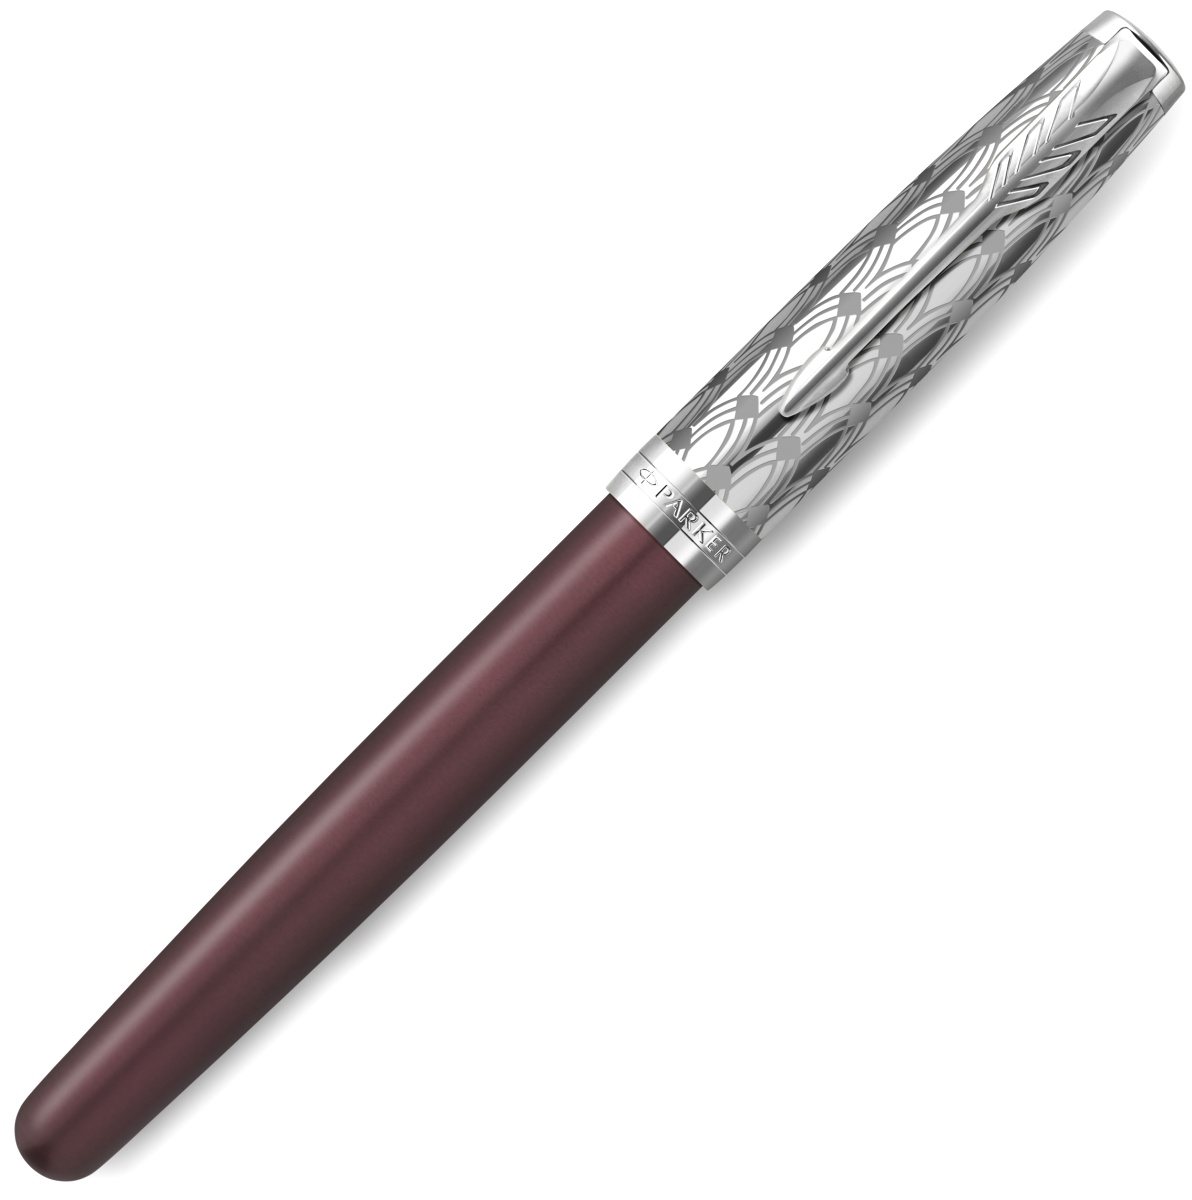  Ручка-роллер Parker Sonnet Premium T537, Metal Red CT, фото 2